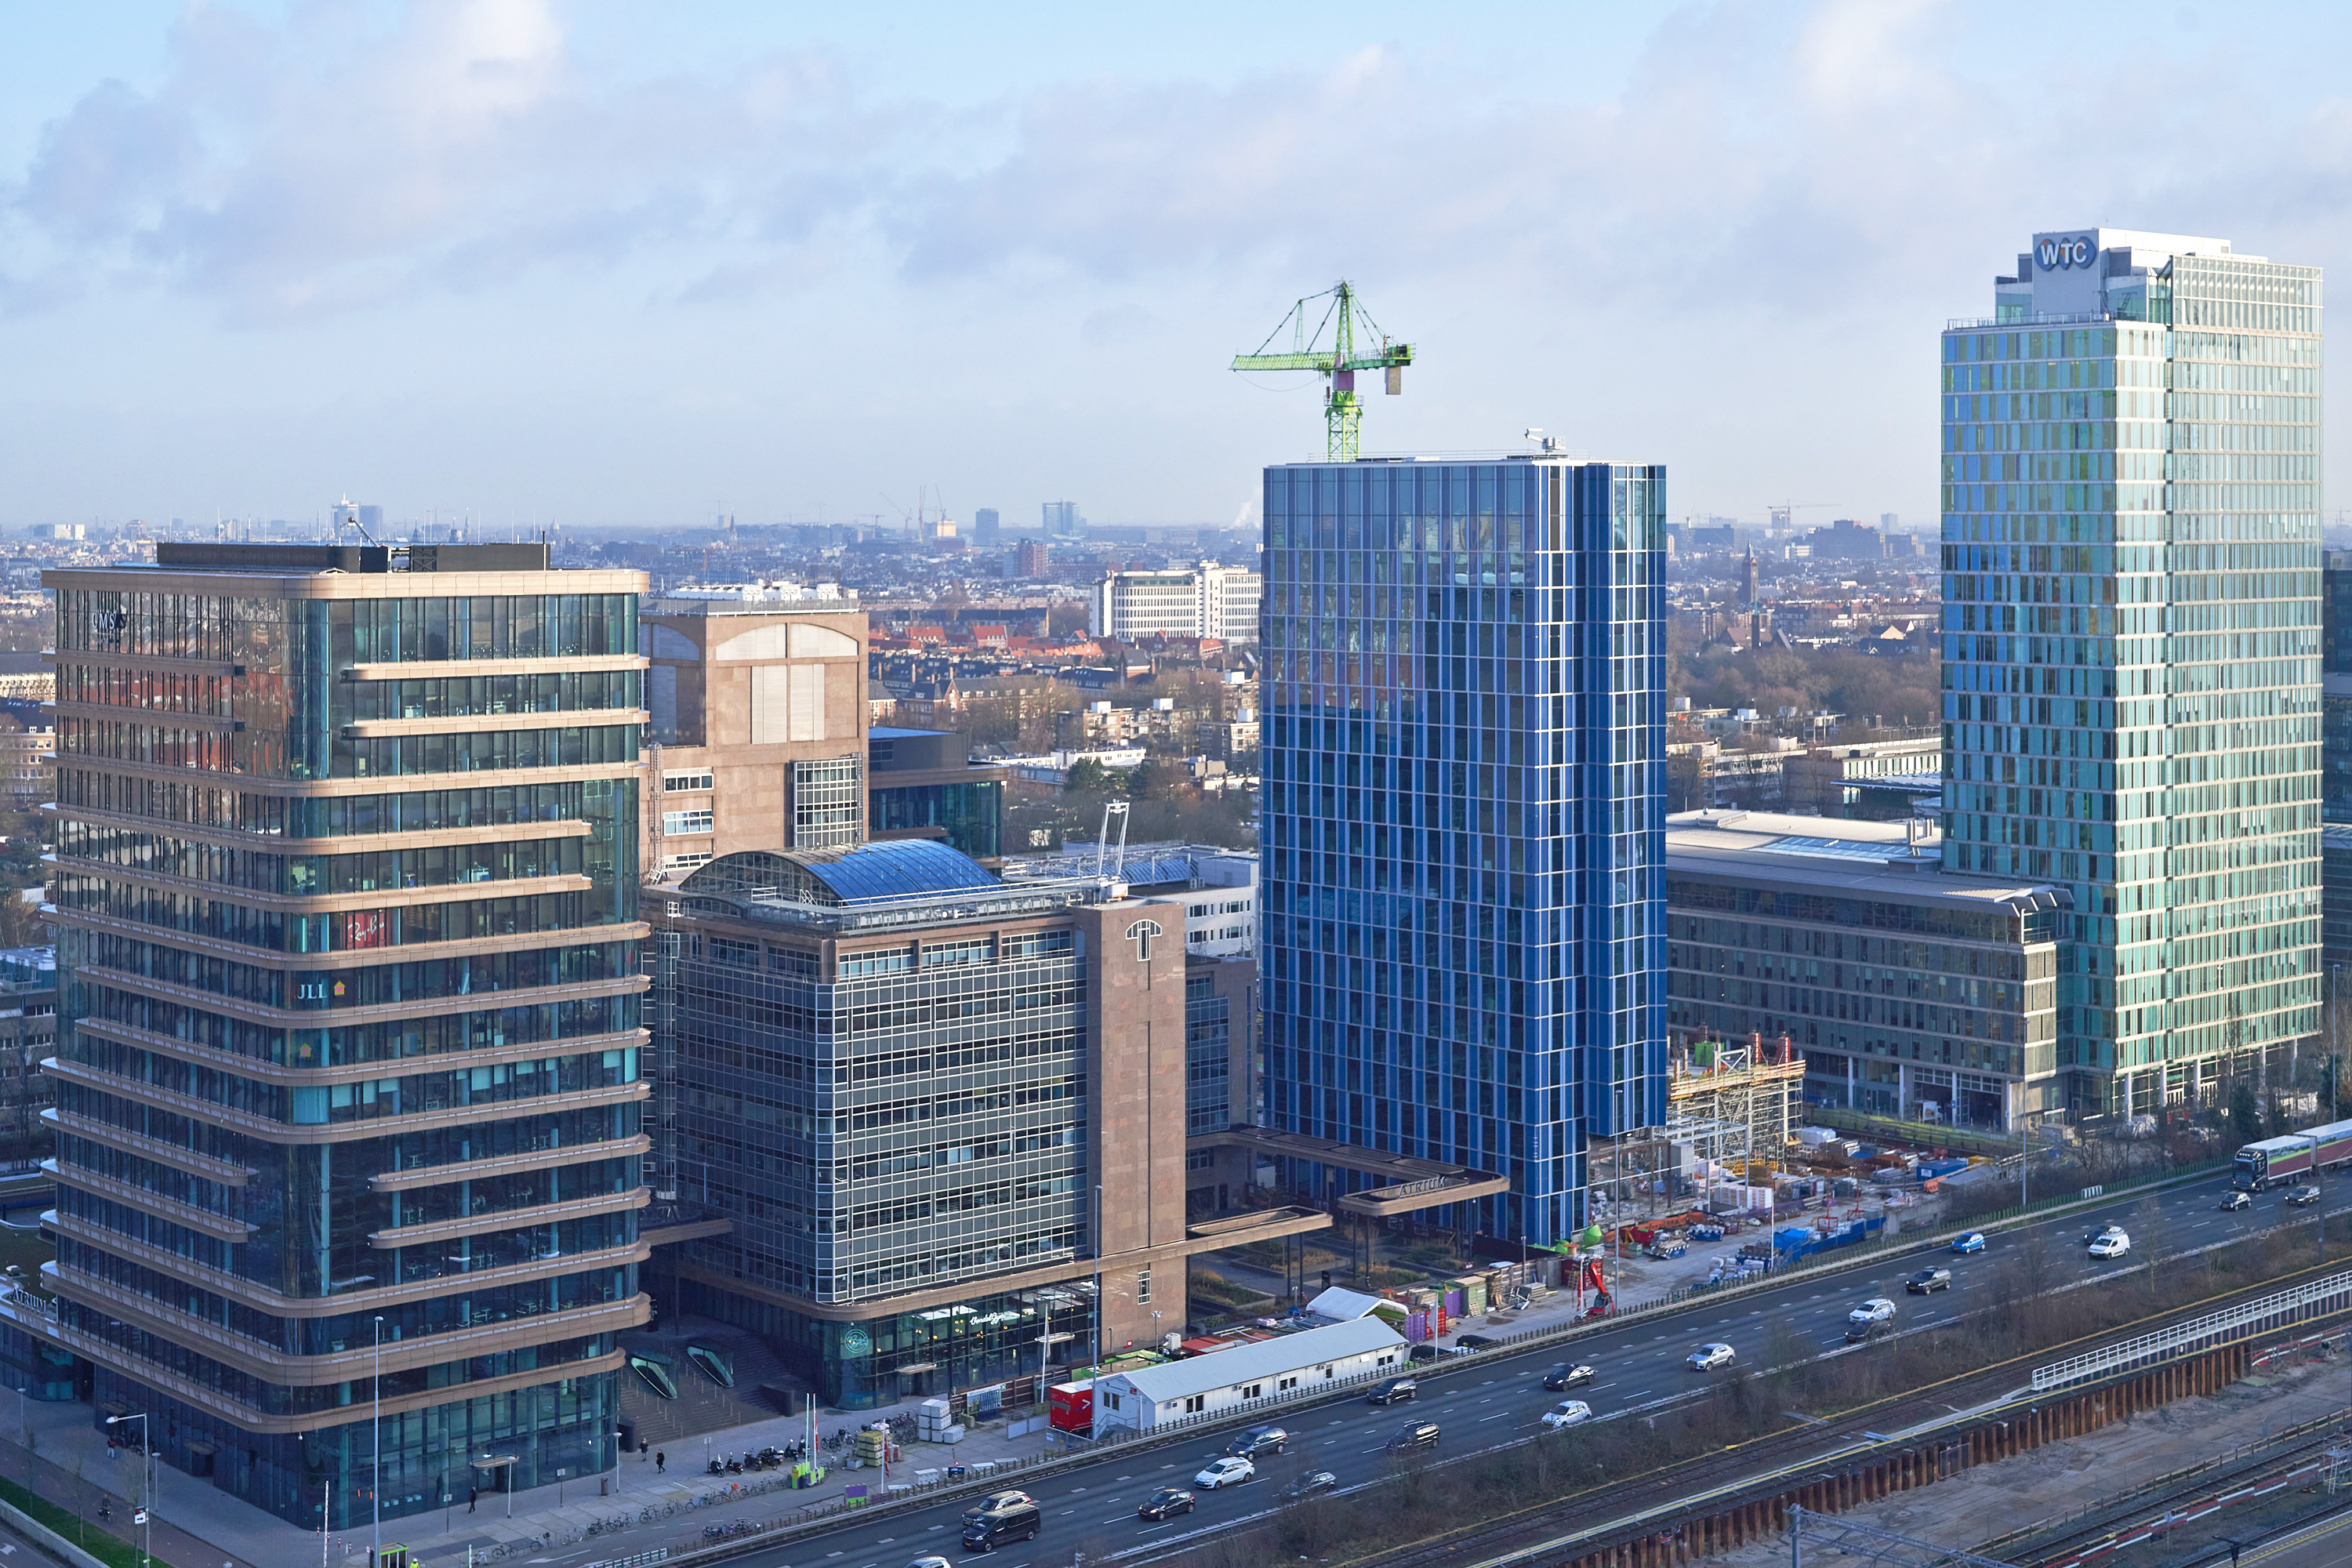 Transformation of 2Amsterdam progressing rapidly